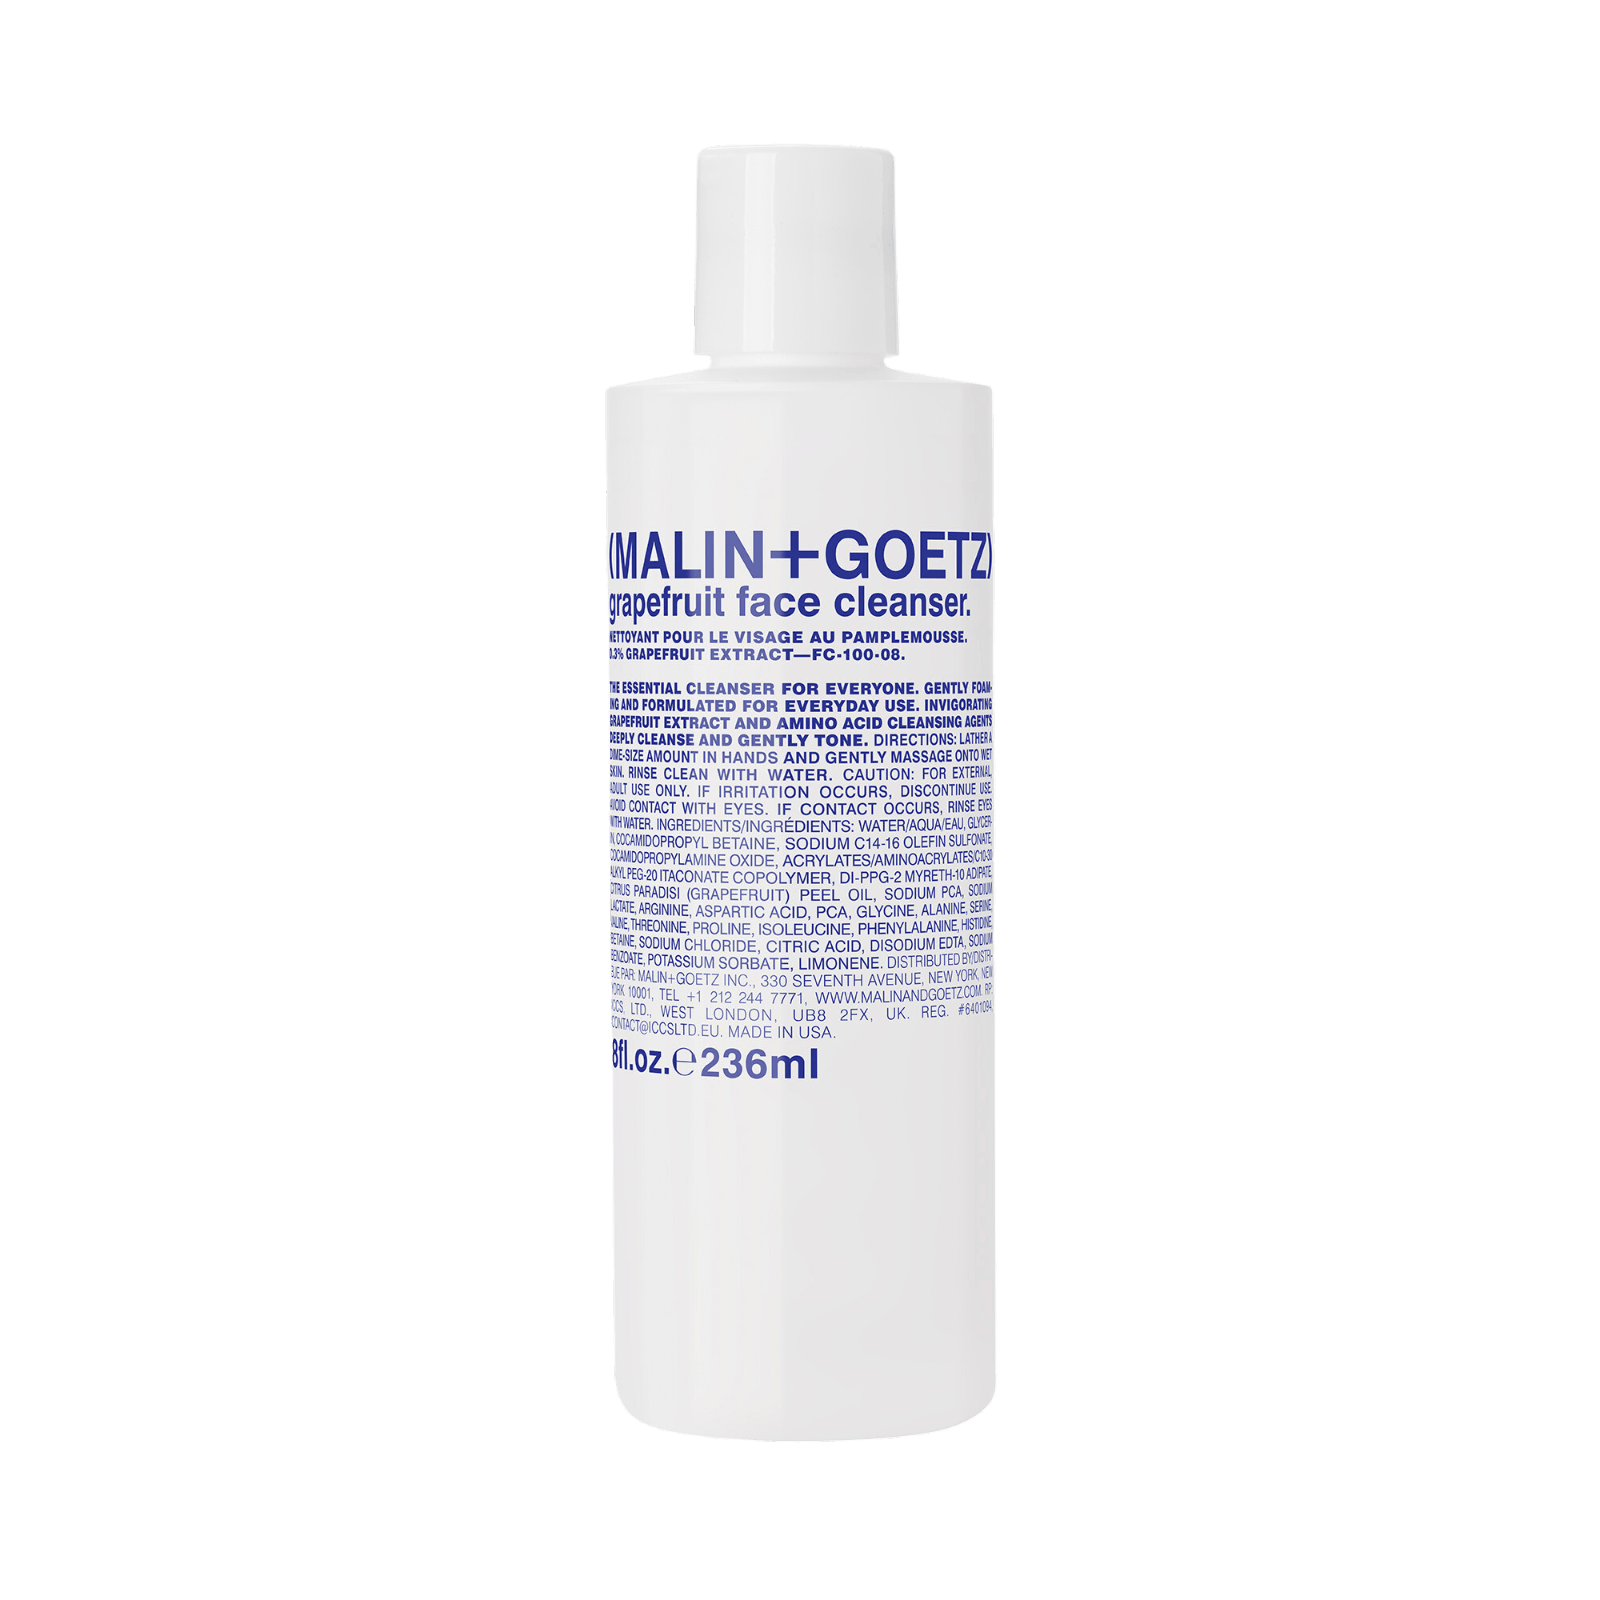 Malin + Goetz - Grapefruit face cleanser | Perfume Lounge